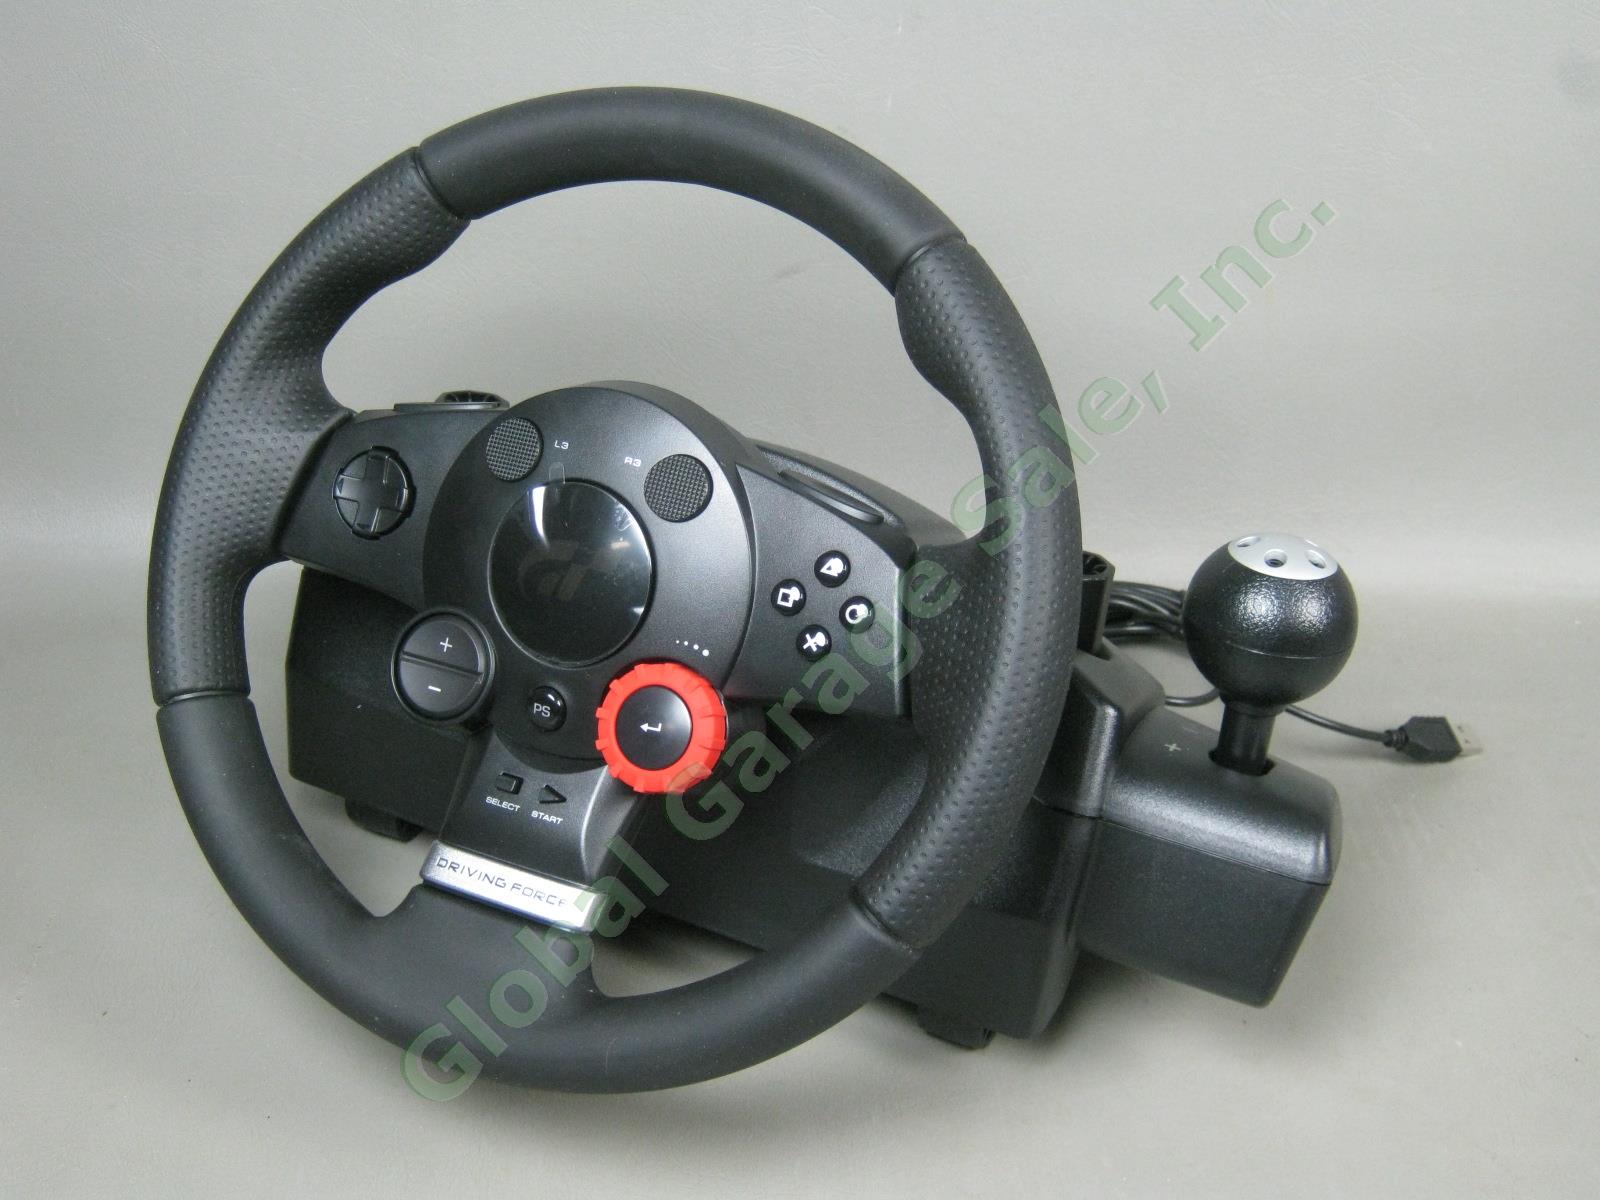 Logitech Driving Force GT Feedback E-X5C19 PS3 PS2 PC Racing Wheel Pedal MINT!! 1